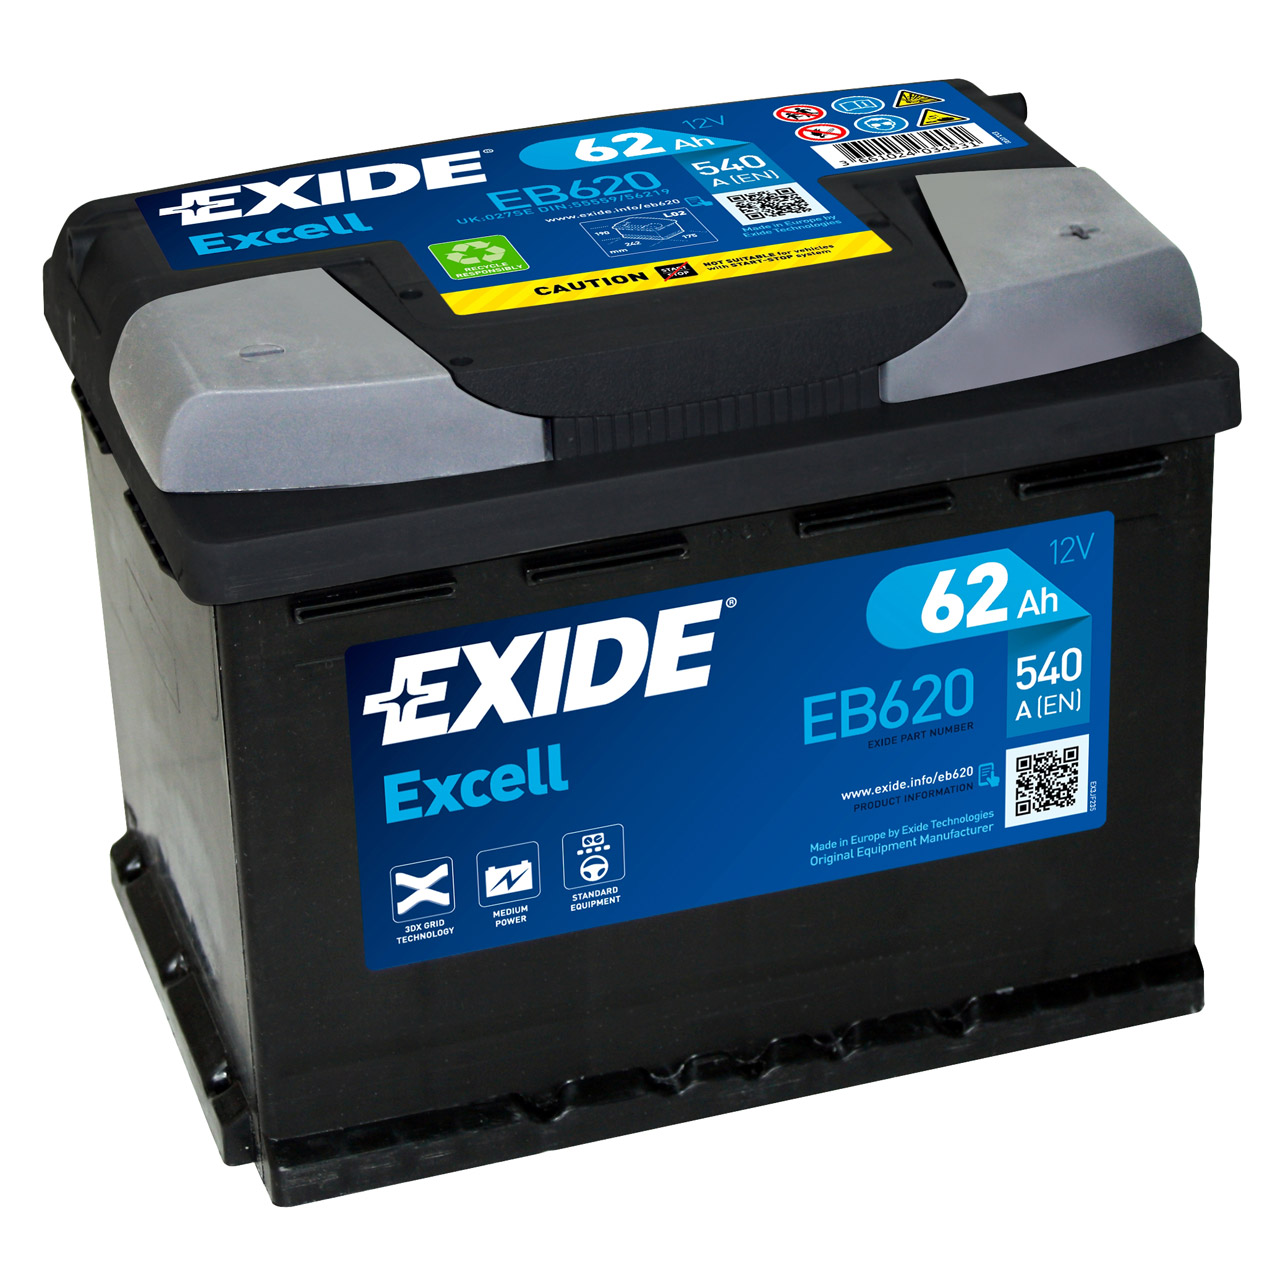 Exide Premium EA640 64Ah 640AEN Autobatterie Starterbatterie